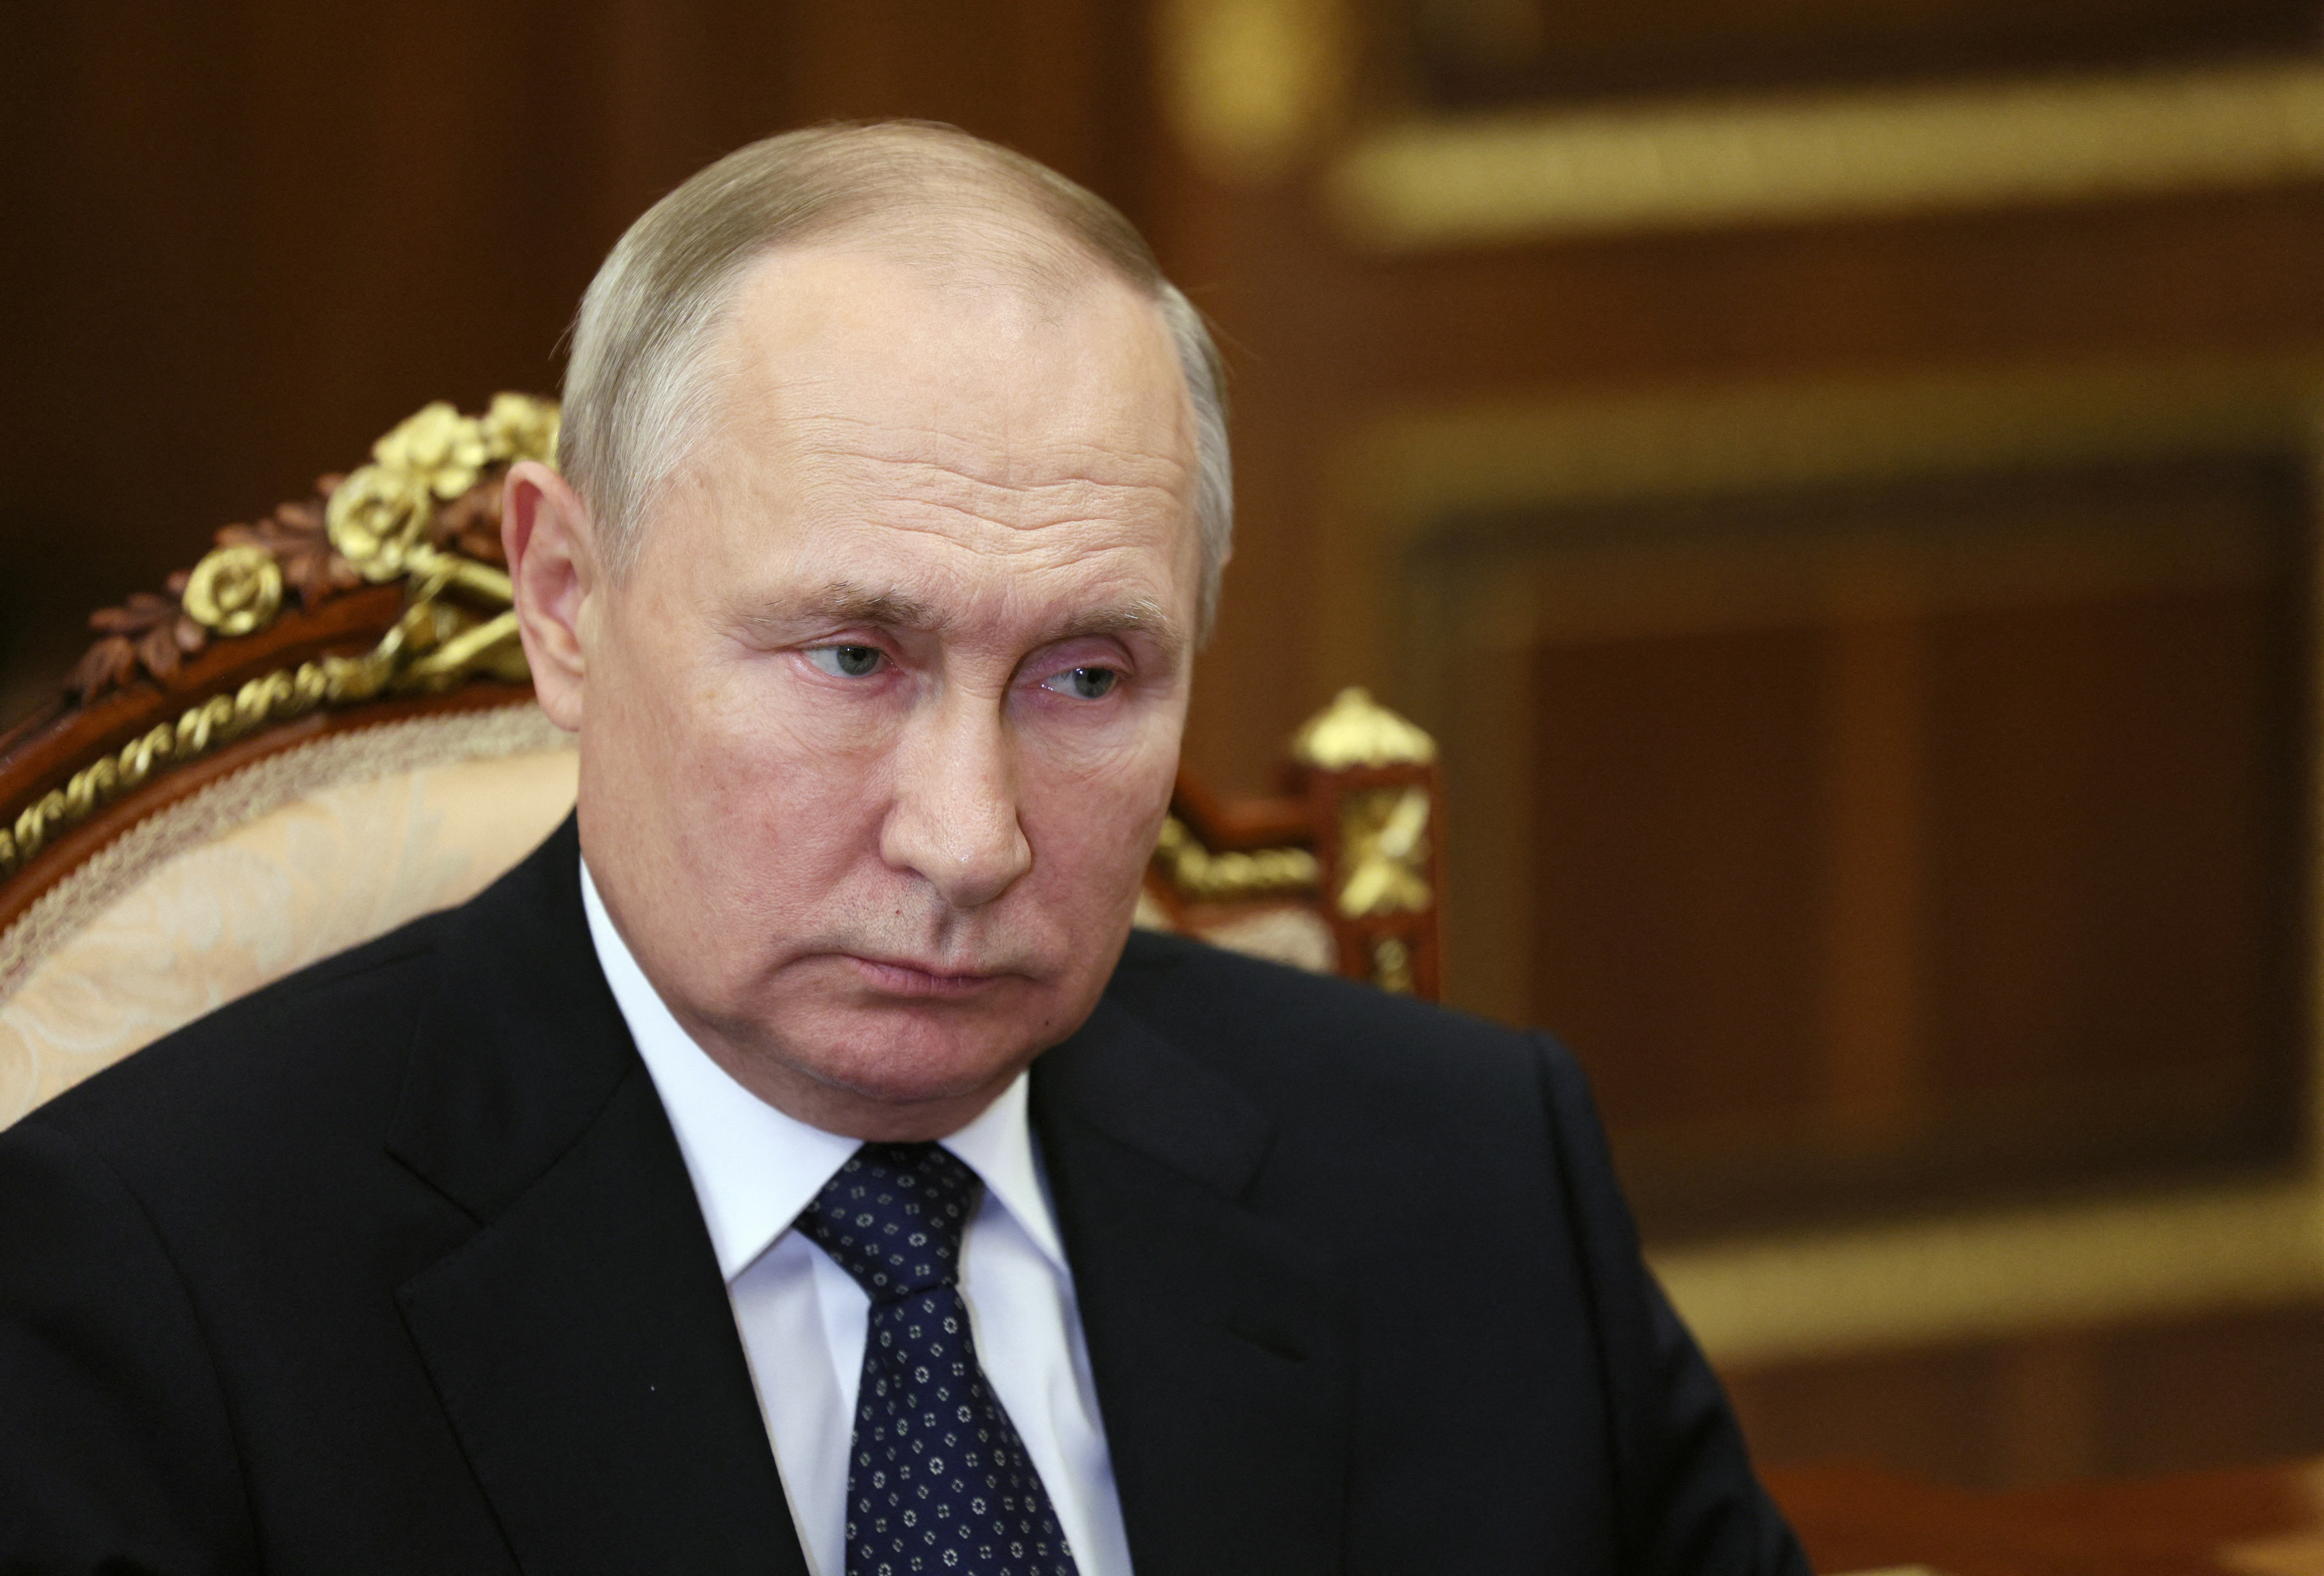 Putin held phone call with Turkey's Erdogan, Kremlin says | Reuters